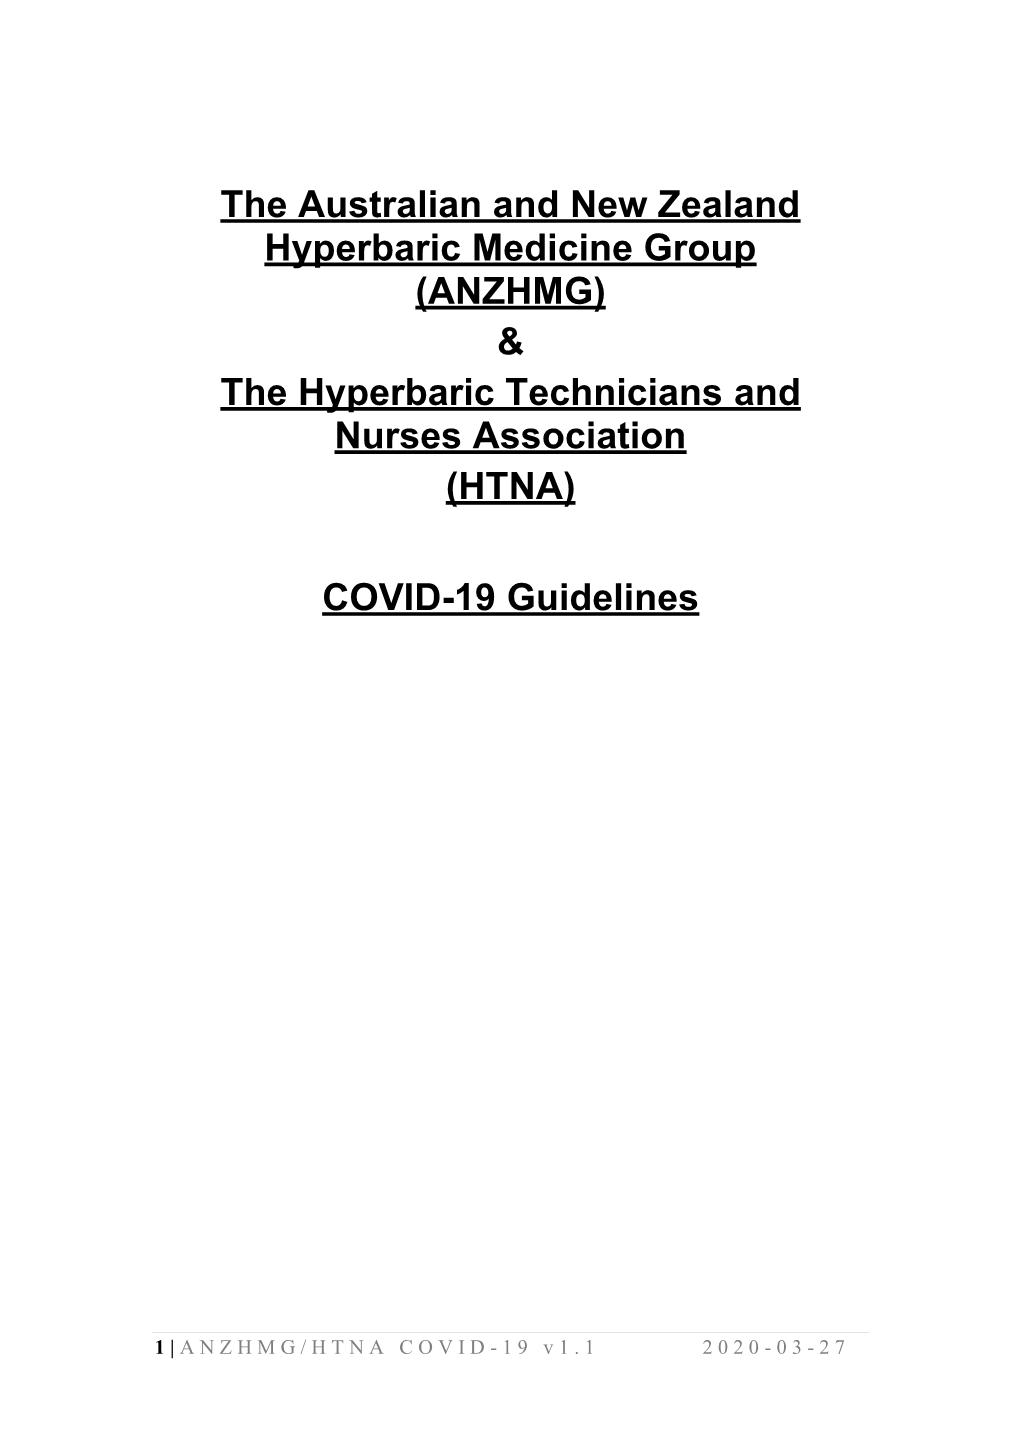 ANZHMG) & the Hyperbaric Technicians and Nurses Association (HTNA)